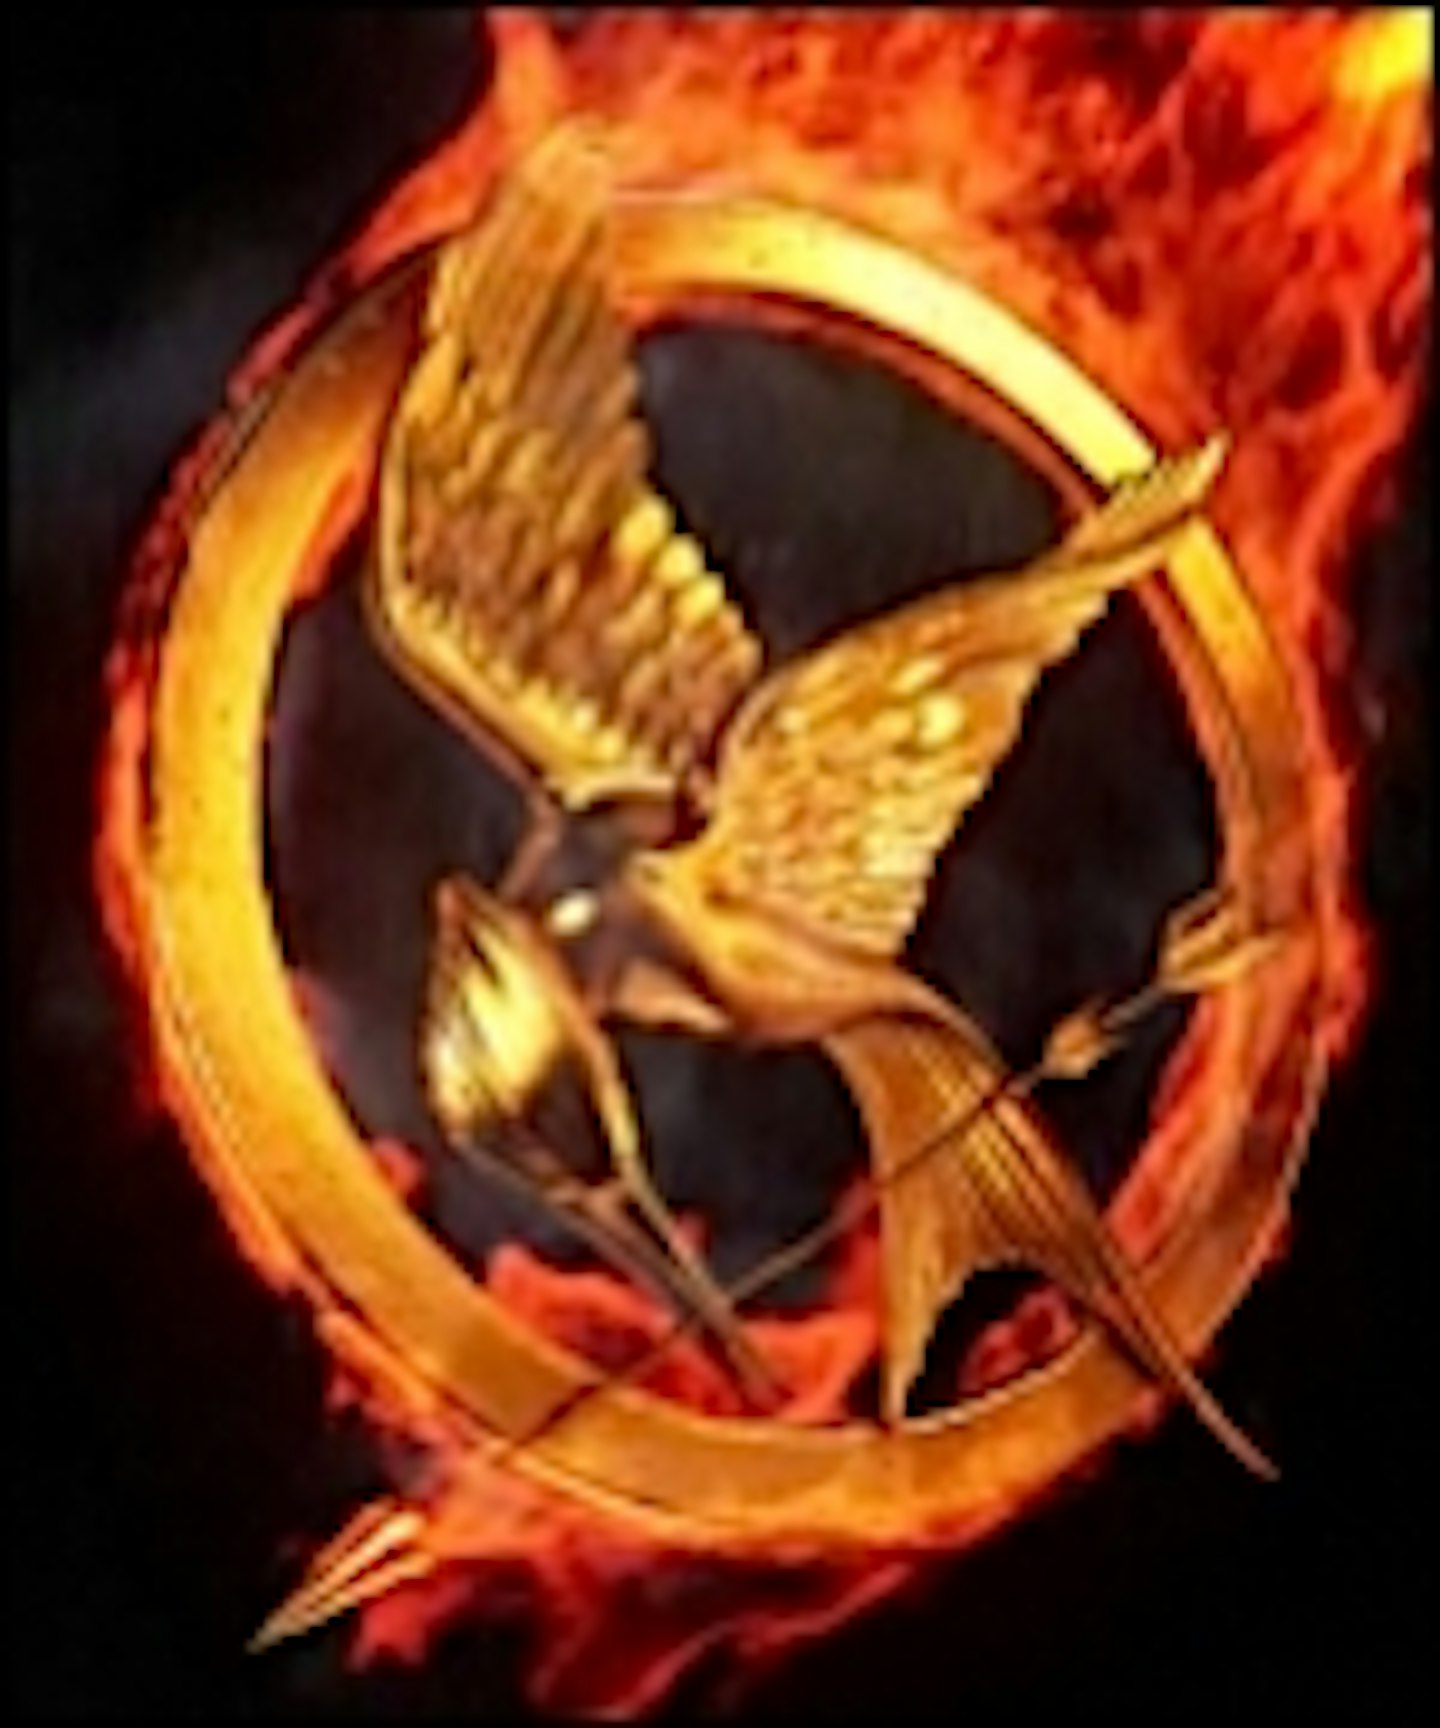 Hunger Games Motion Poster Online